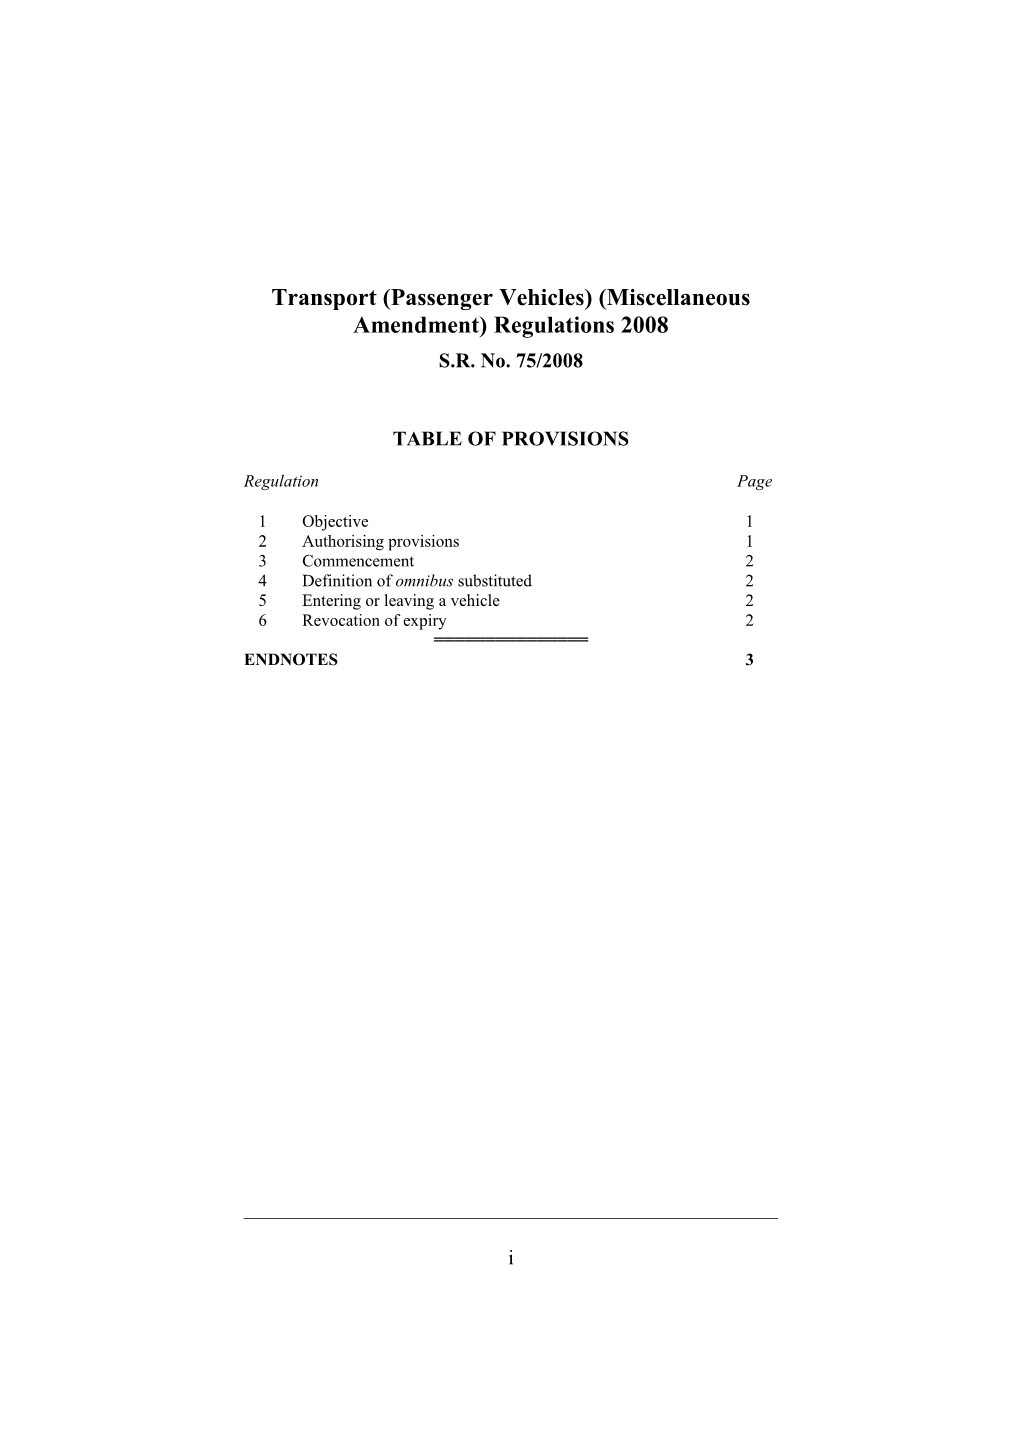 Transport (Passenger Vehicles) (Miscellaneous Amendment) Regulations 2008